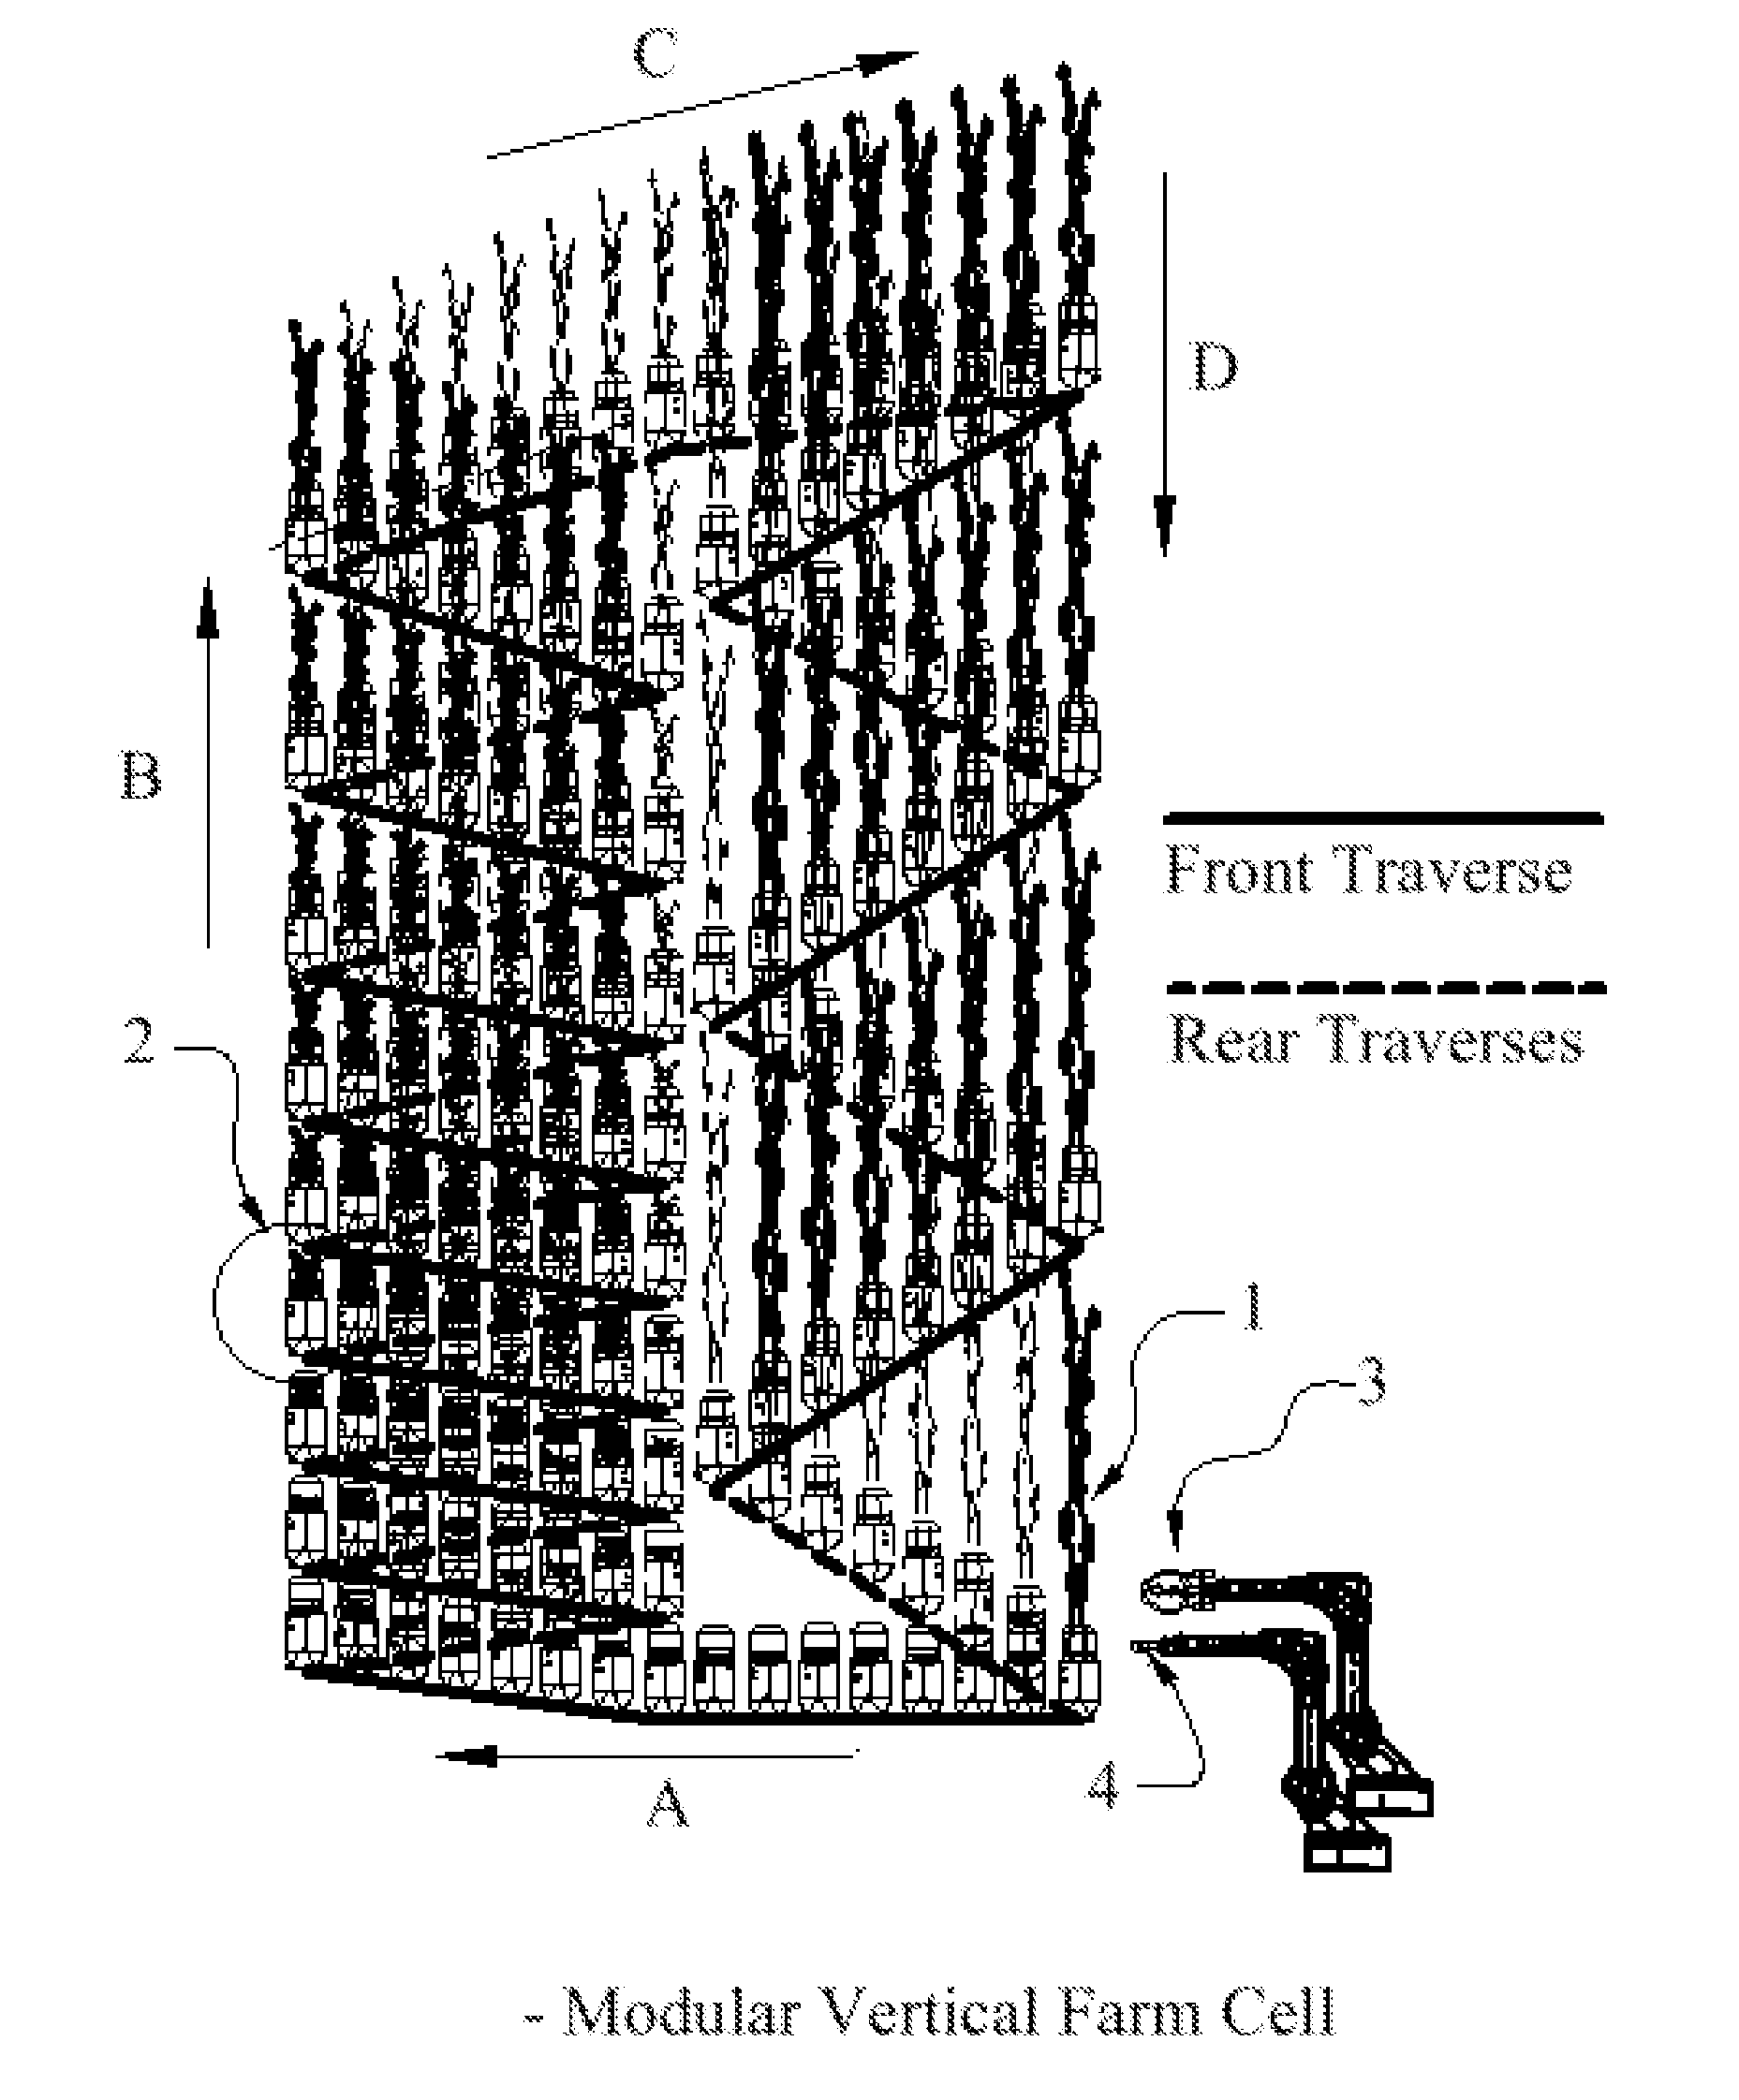 Modular vertical farm cell